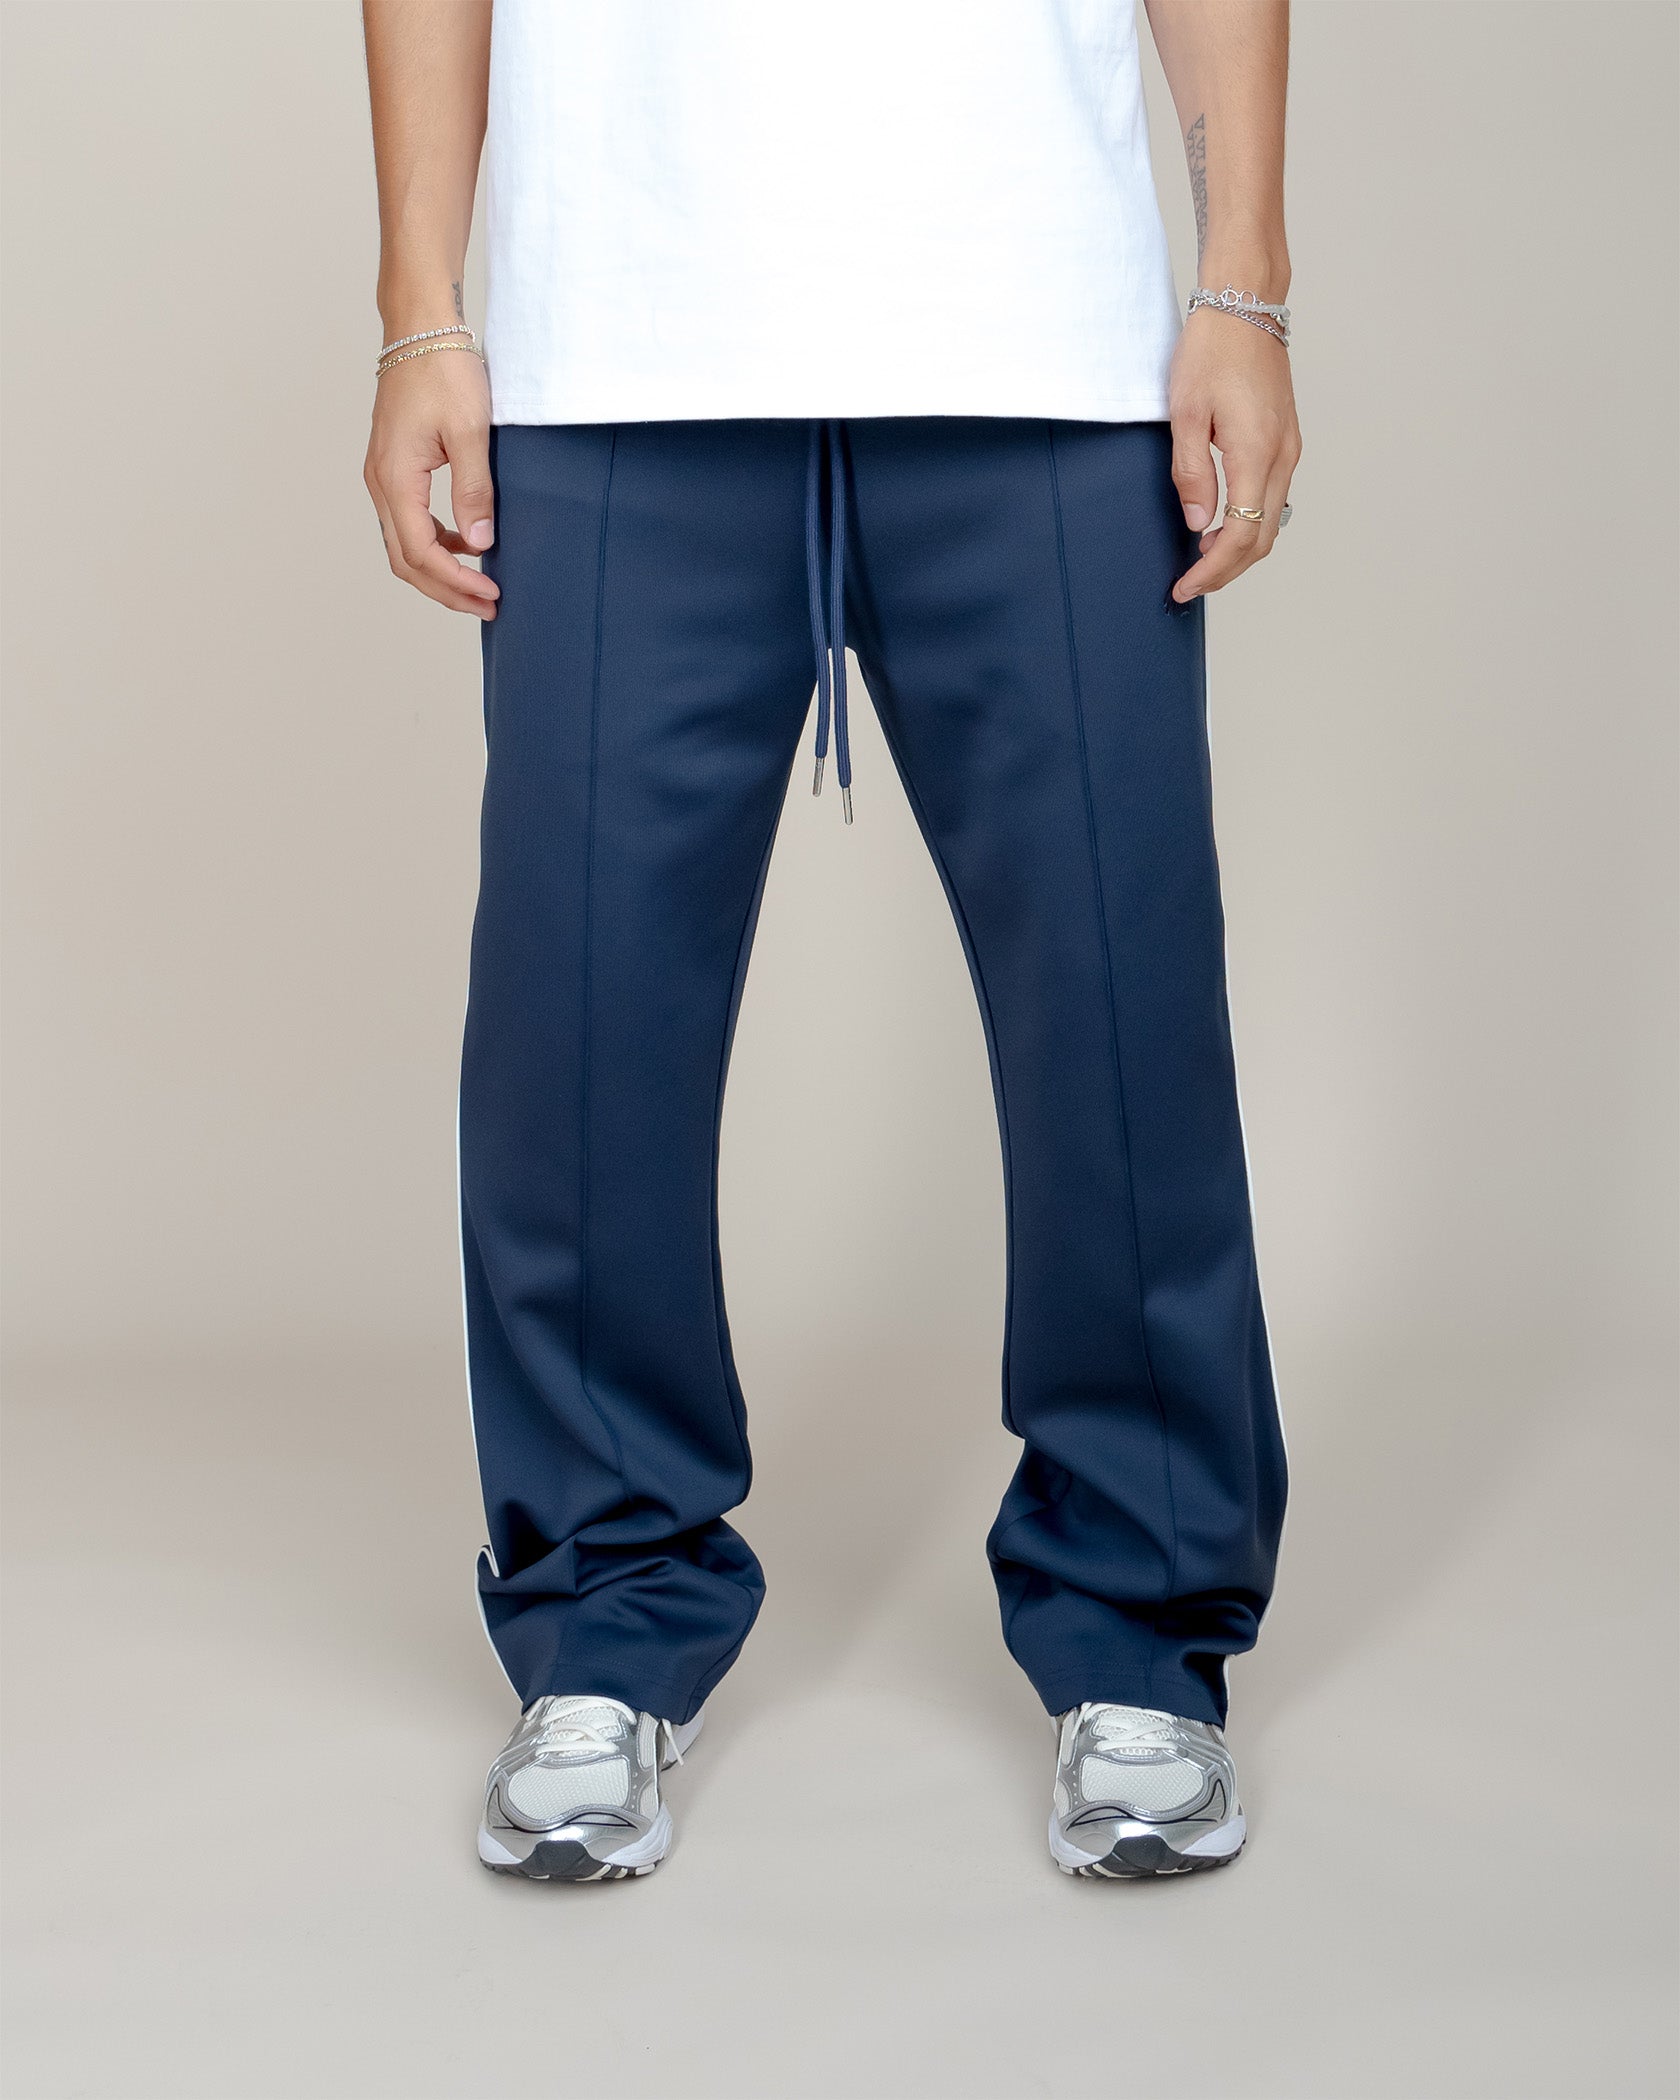 Light Grey Color Indian Terrain 360 Stretchable Trouser Track Pants for Men